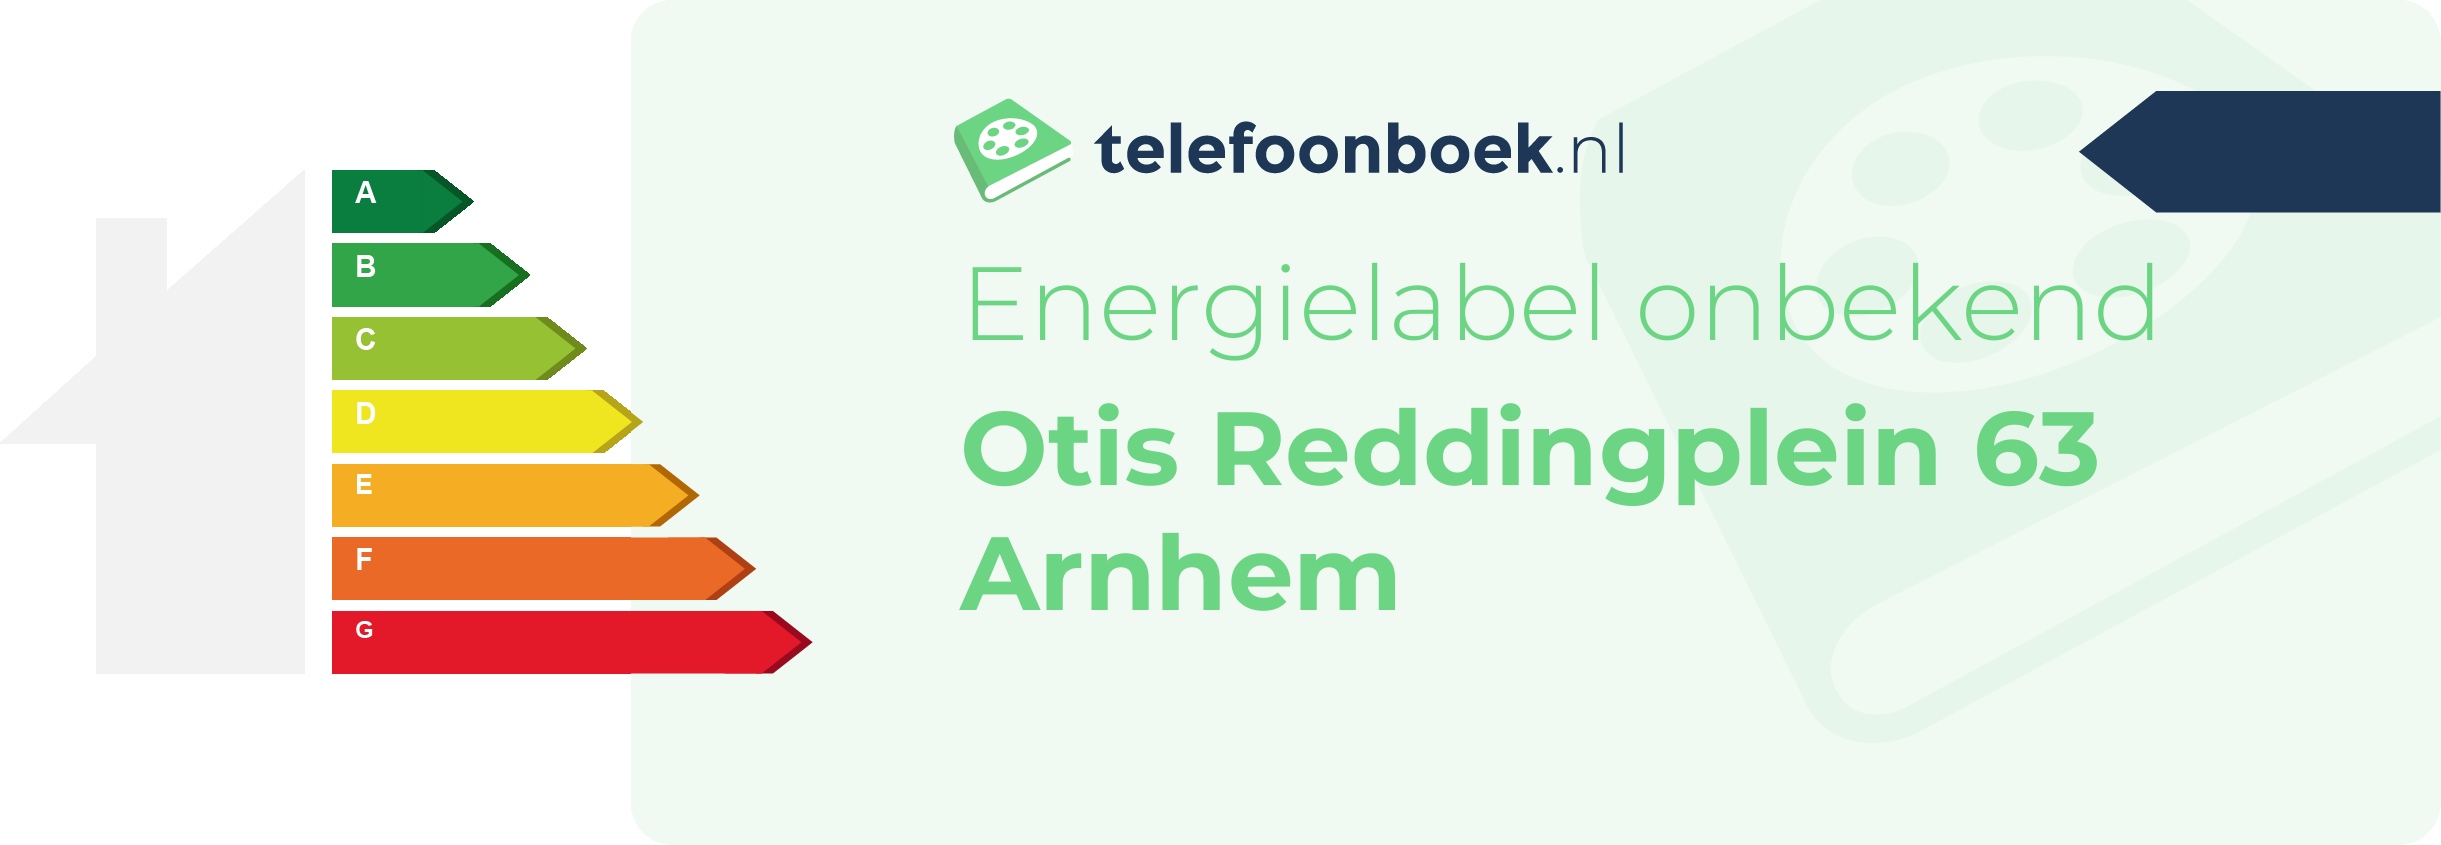 Energielabel Otis Reddingplein 63 Arnhem